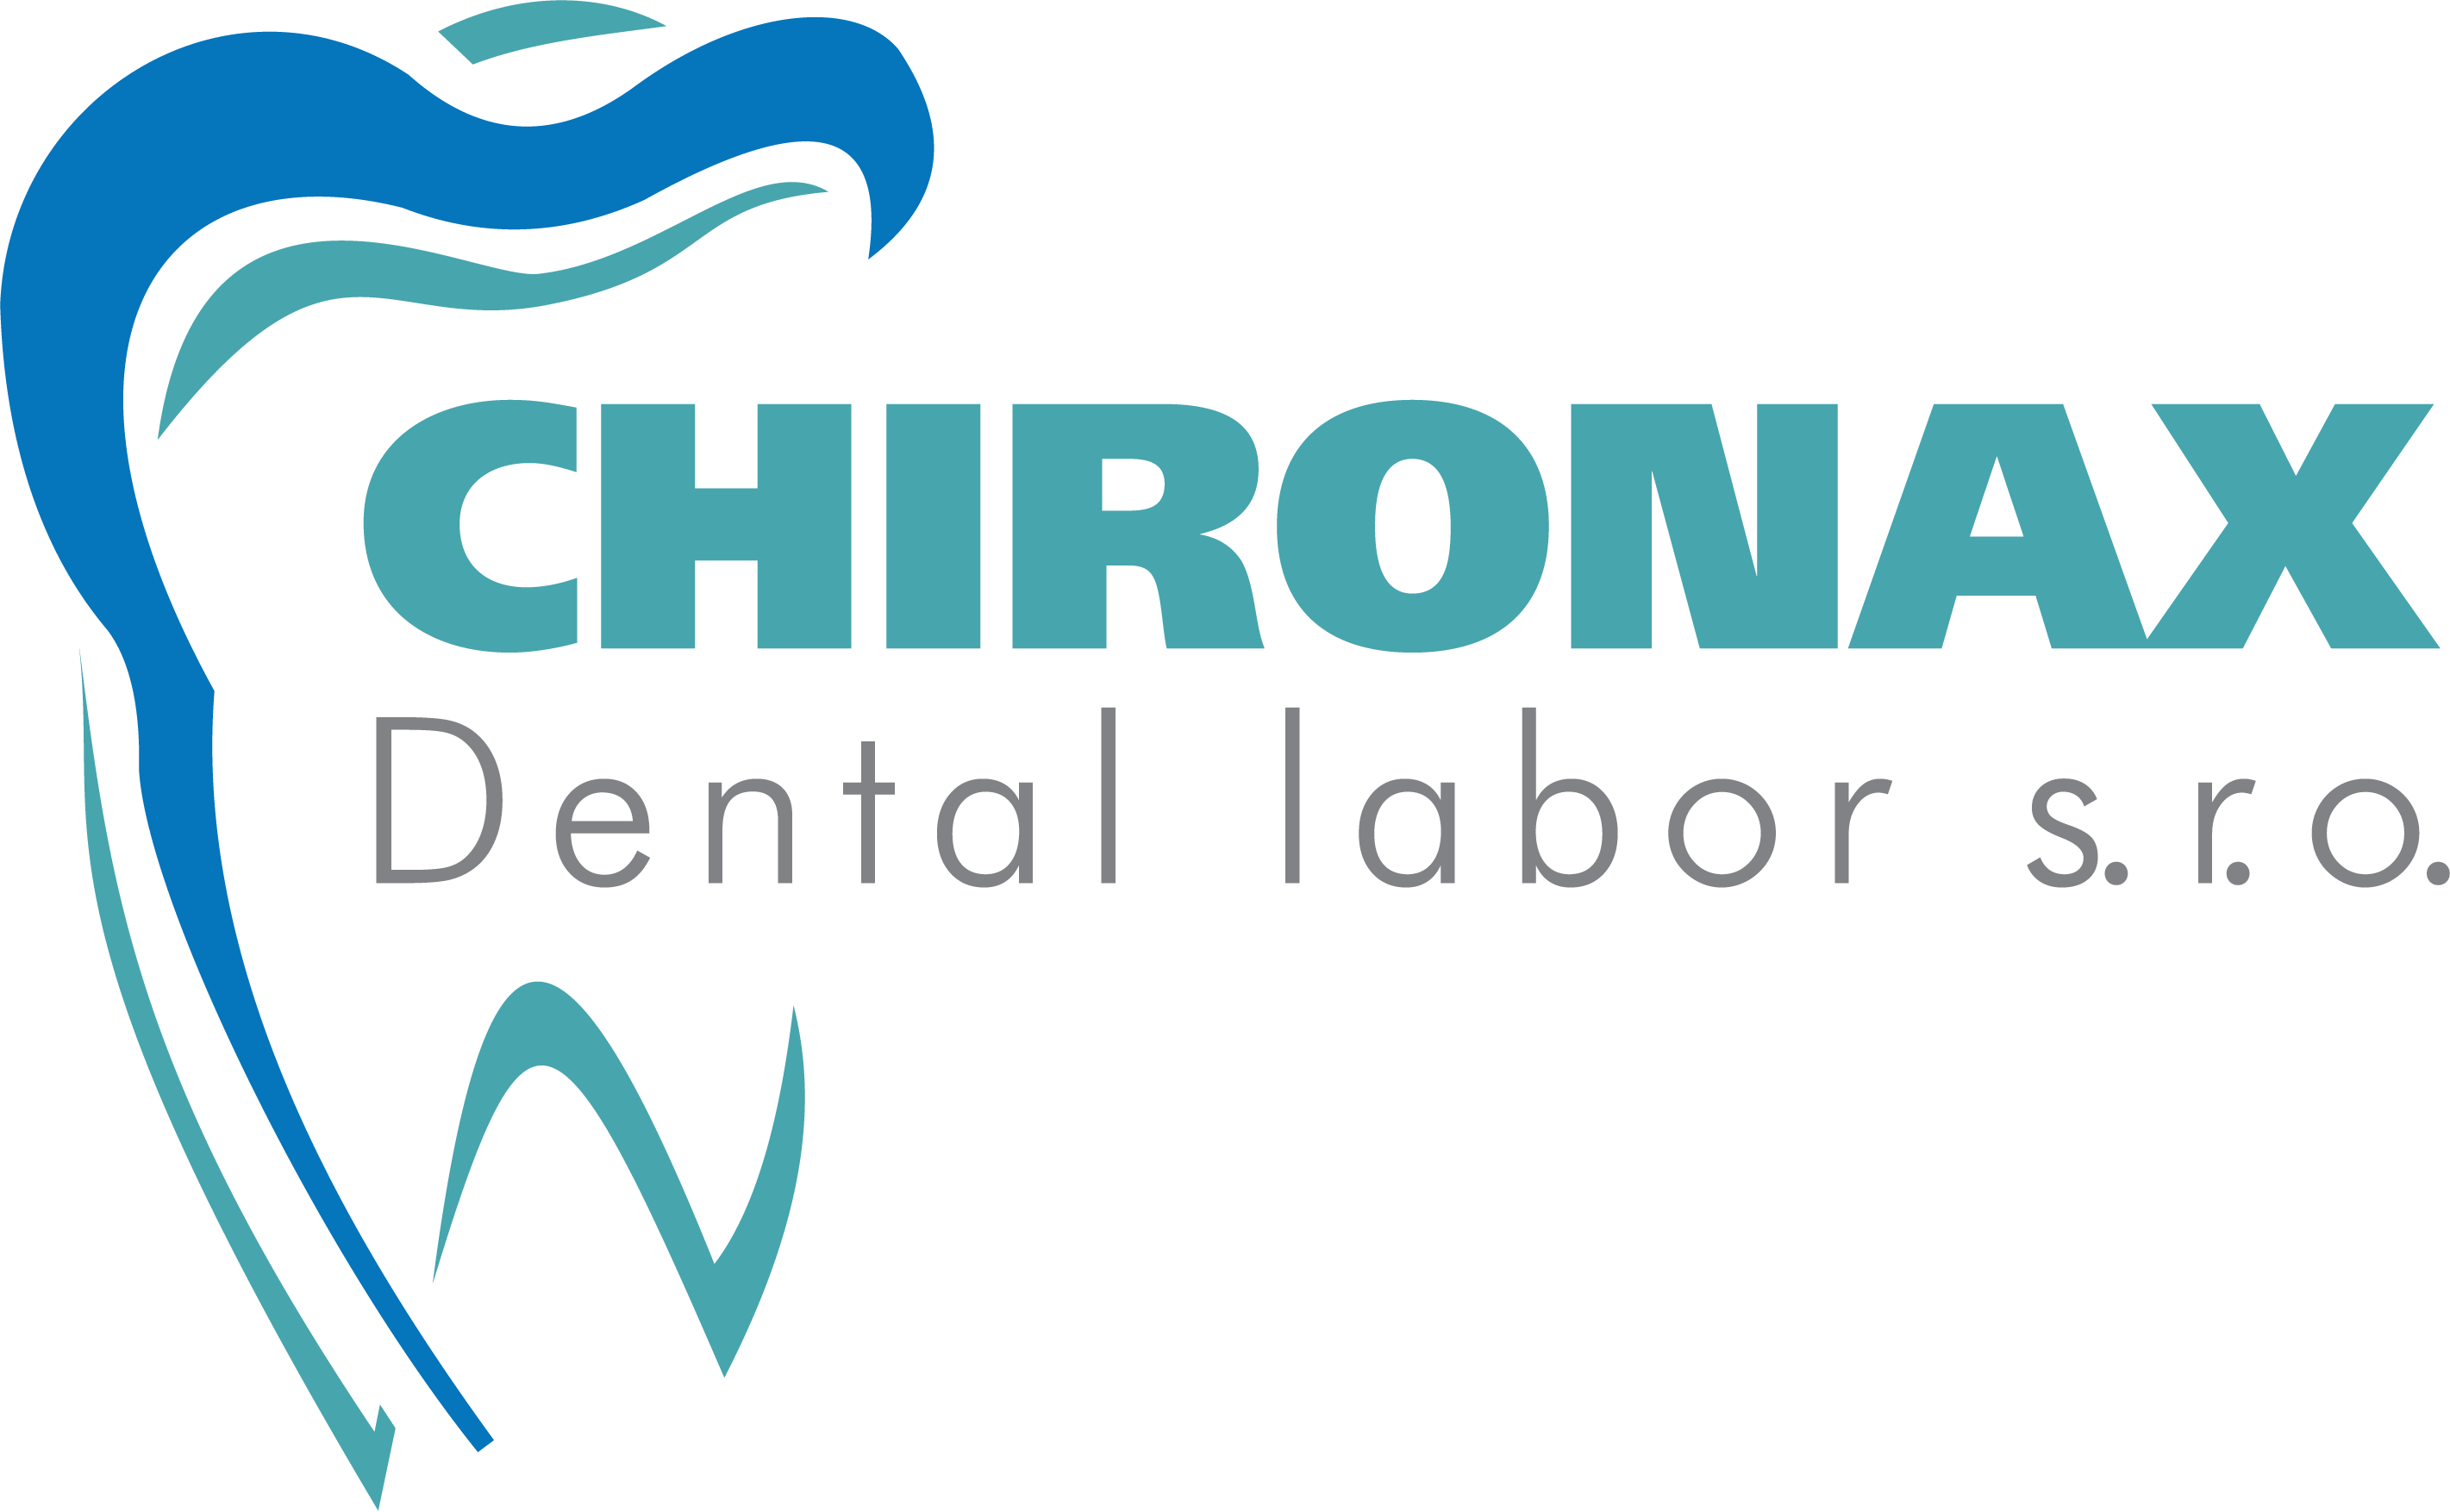 Chironax logo